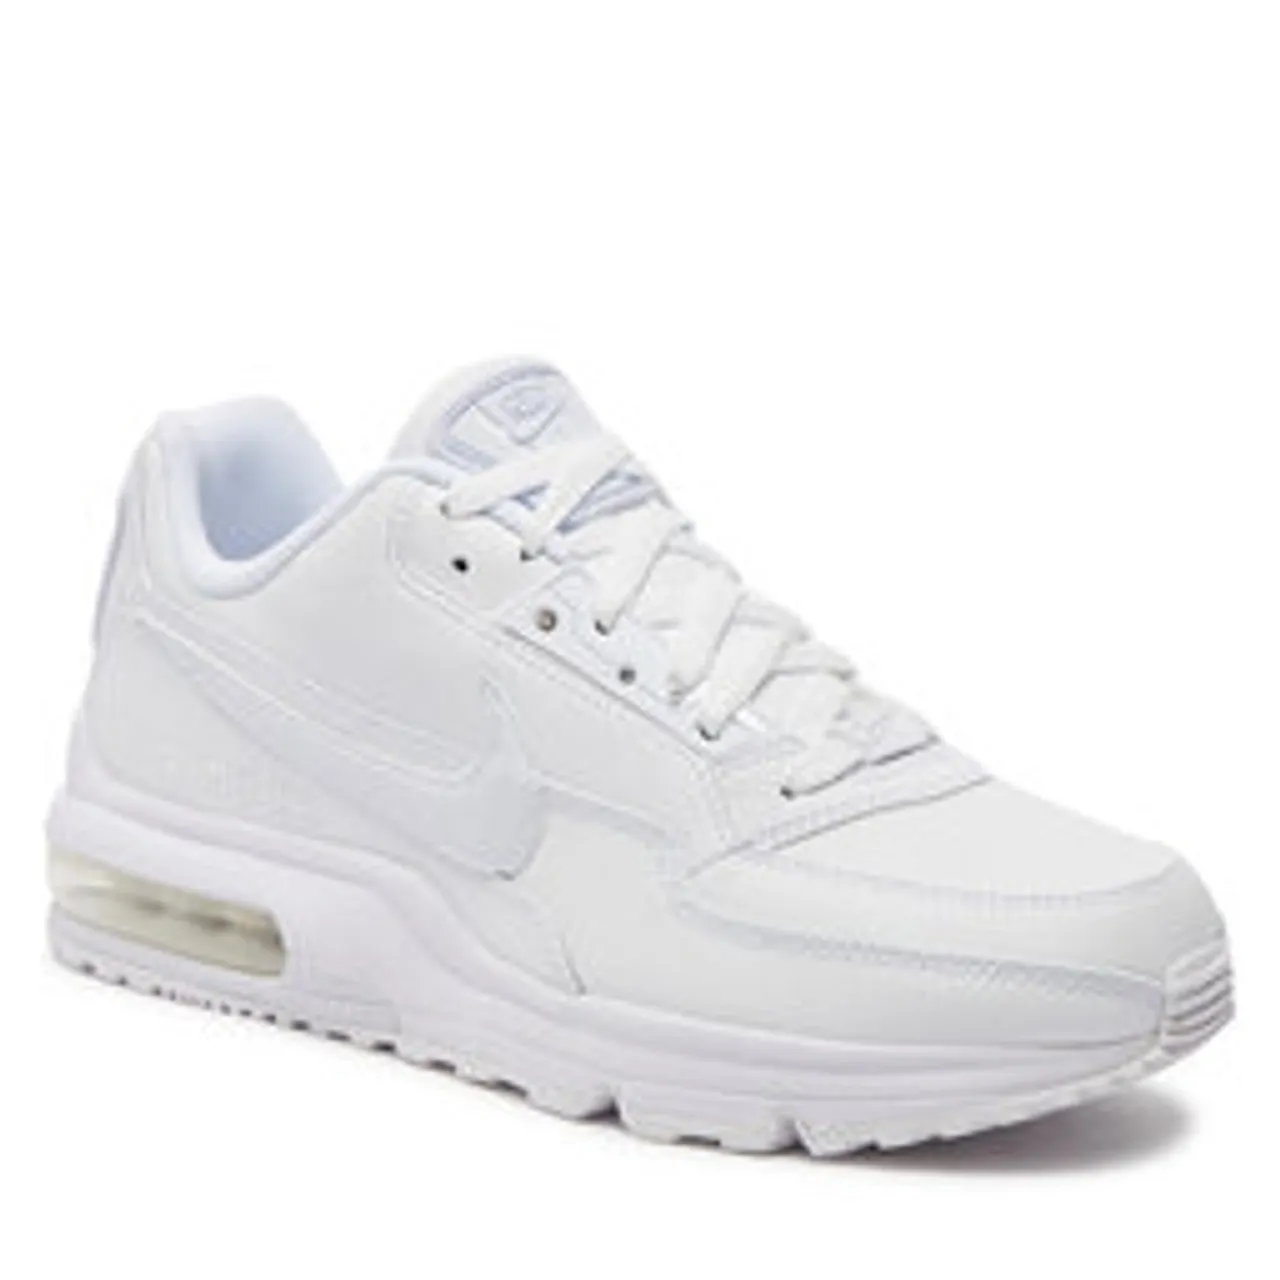 Sneakers Nike Air Max Ltd 3 687977 111 Weiß